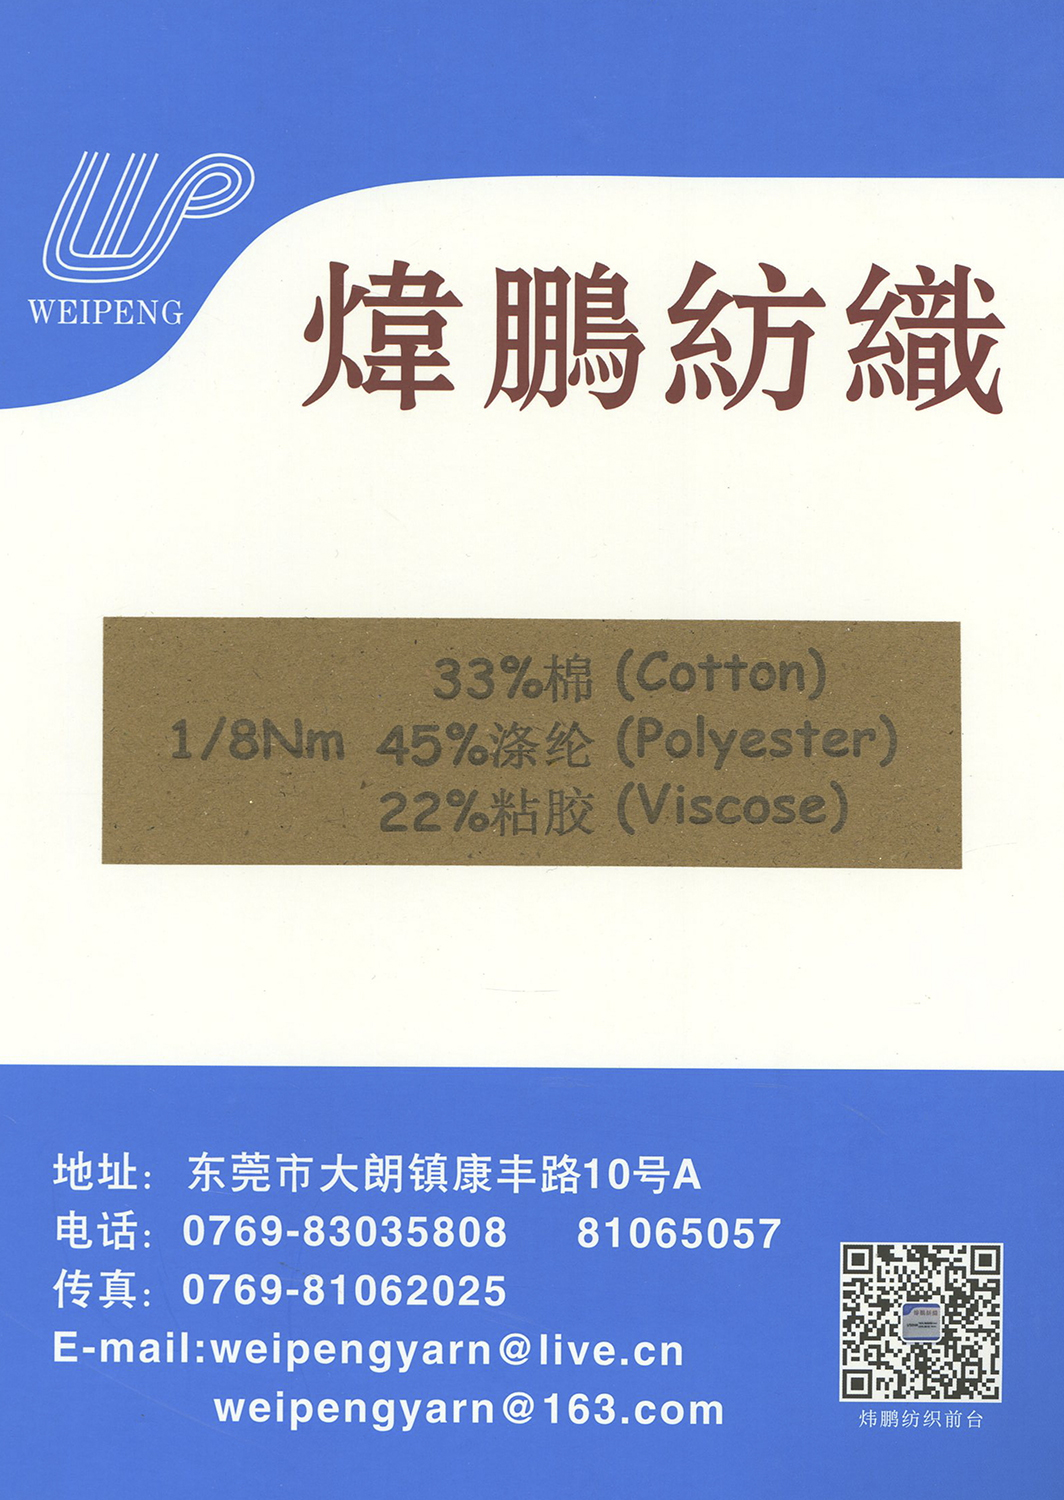 1/8Nm 33%棉 45%涤纶 22%粘胶